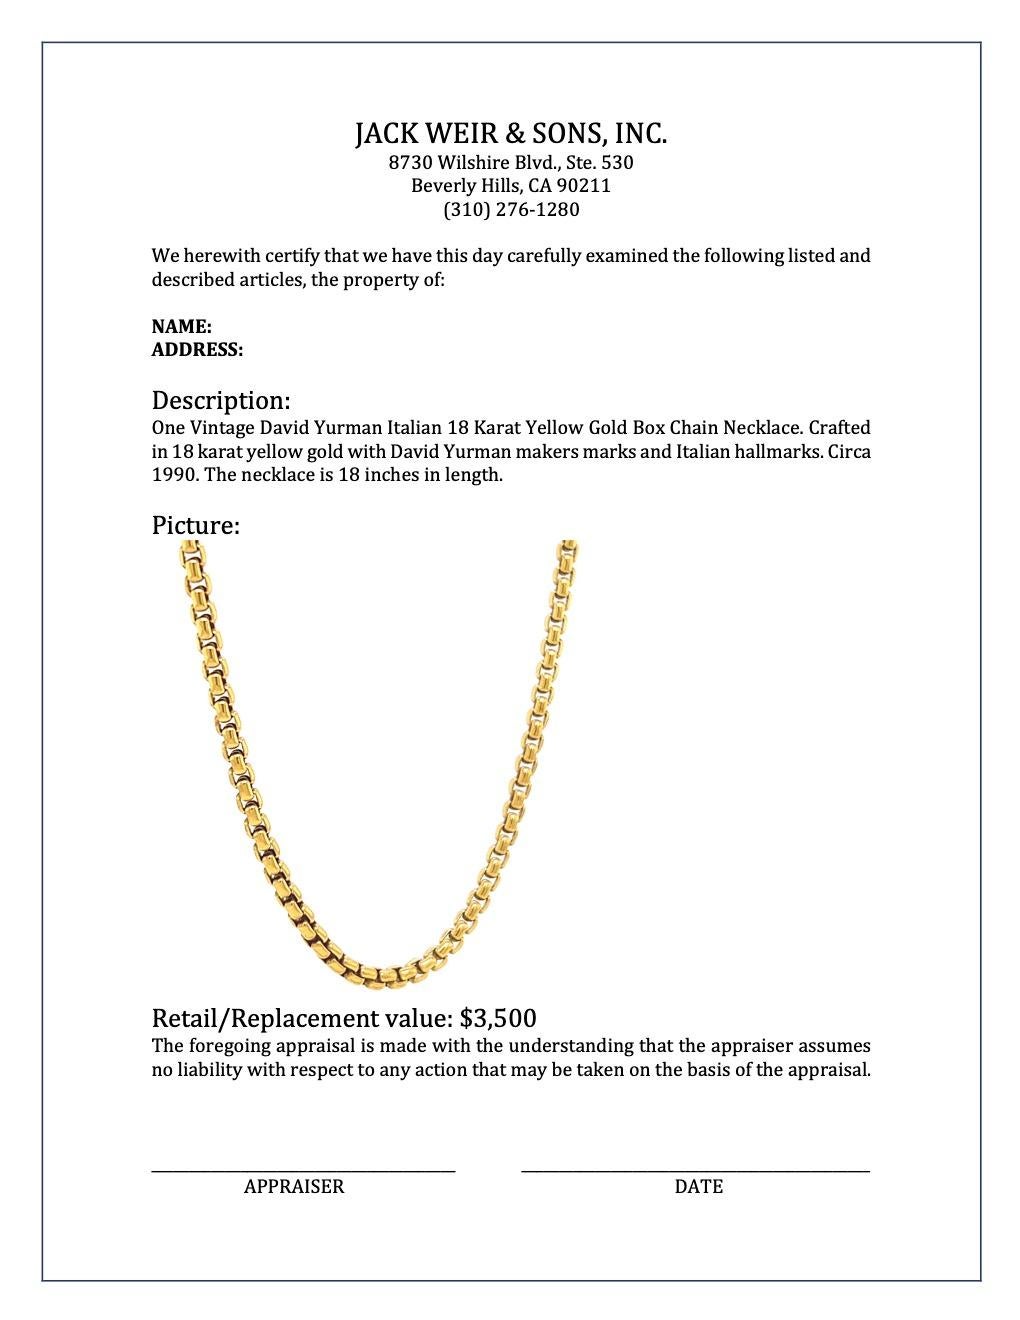 Vintage David Yurman Italian 18 Karat Yellow Gold Box Chain Necklace 1